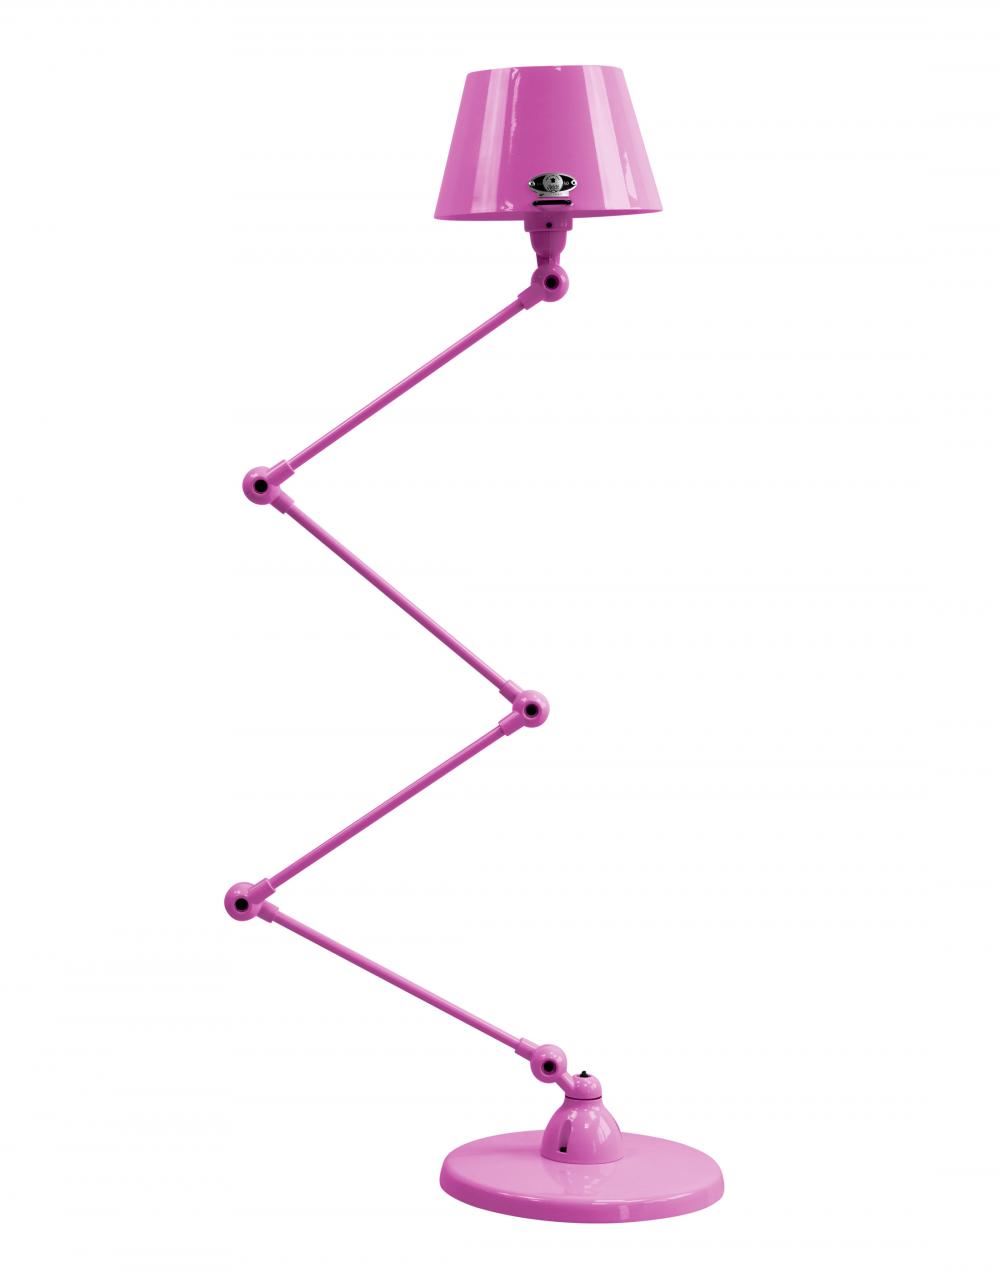 Jielde Aicler Zigzag 4 Arm Desk Or Floor Light Straight Shade Violet Fuchsia Gloss